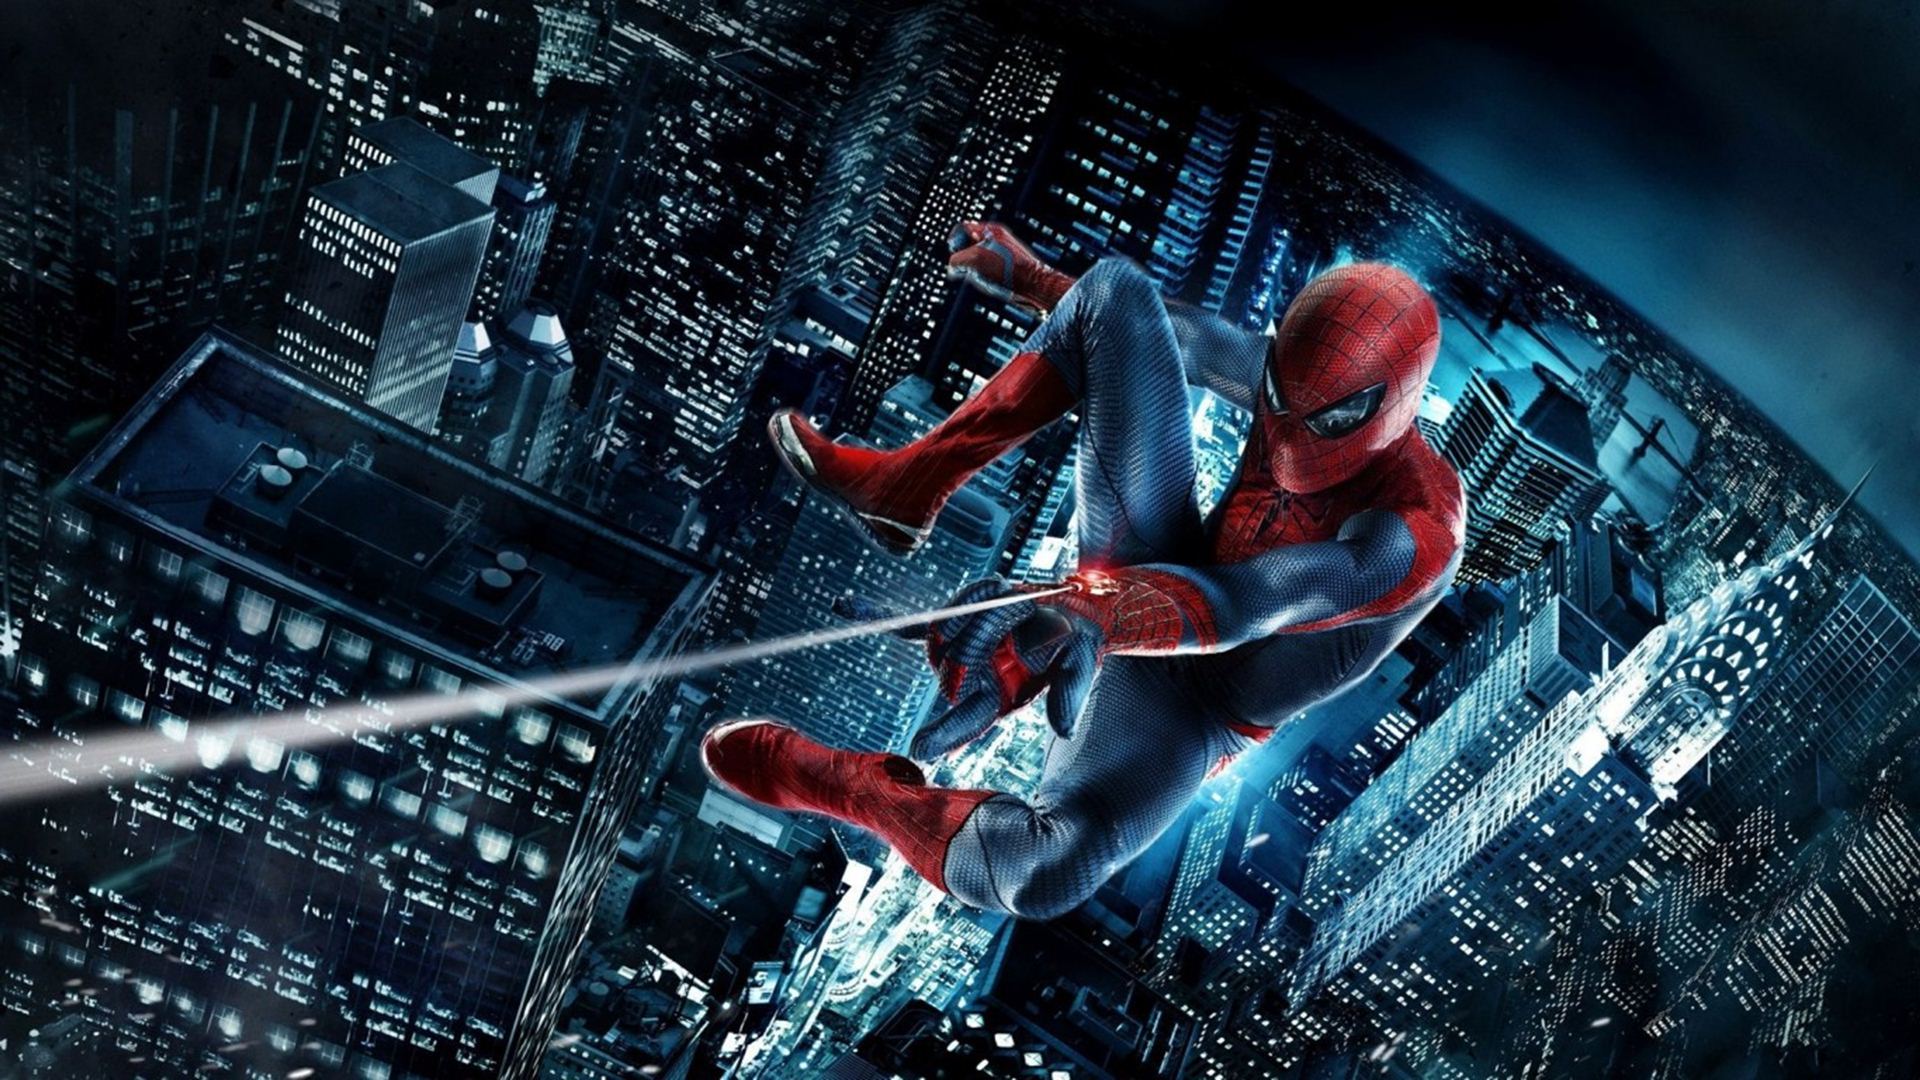 The Amazing SpiderMan Movie HD desktop wallpaper 1920x1080